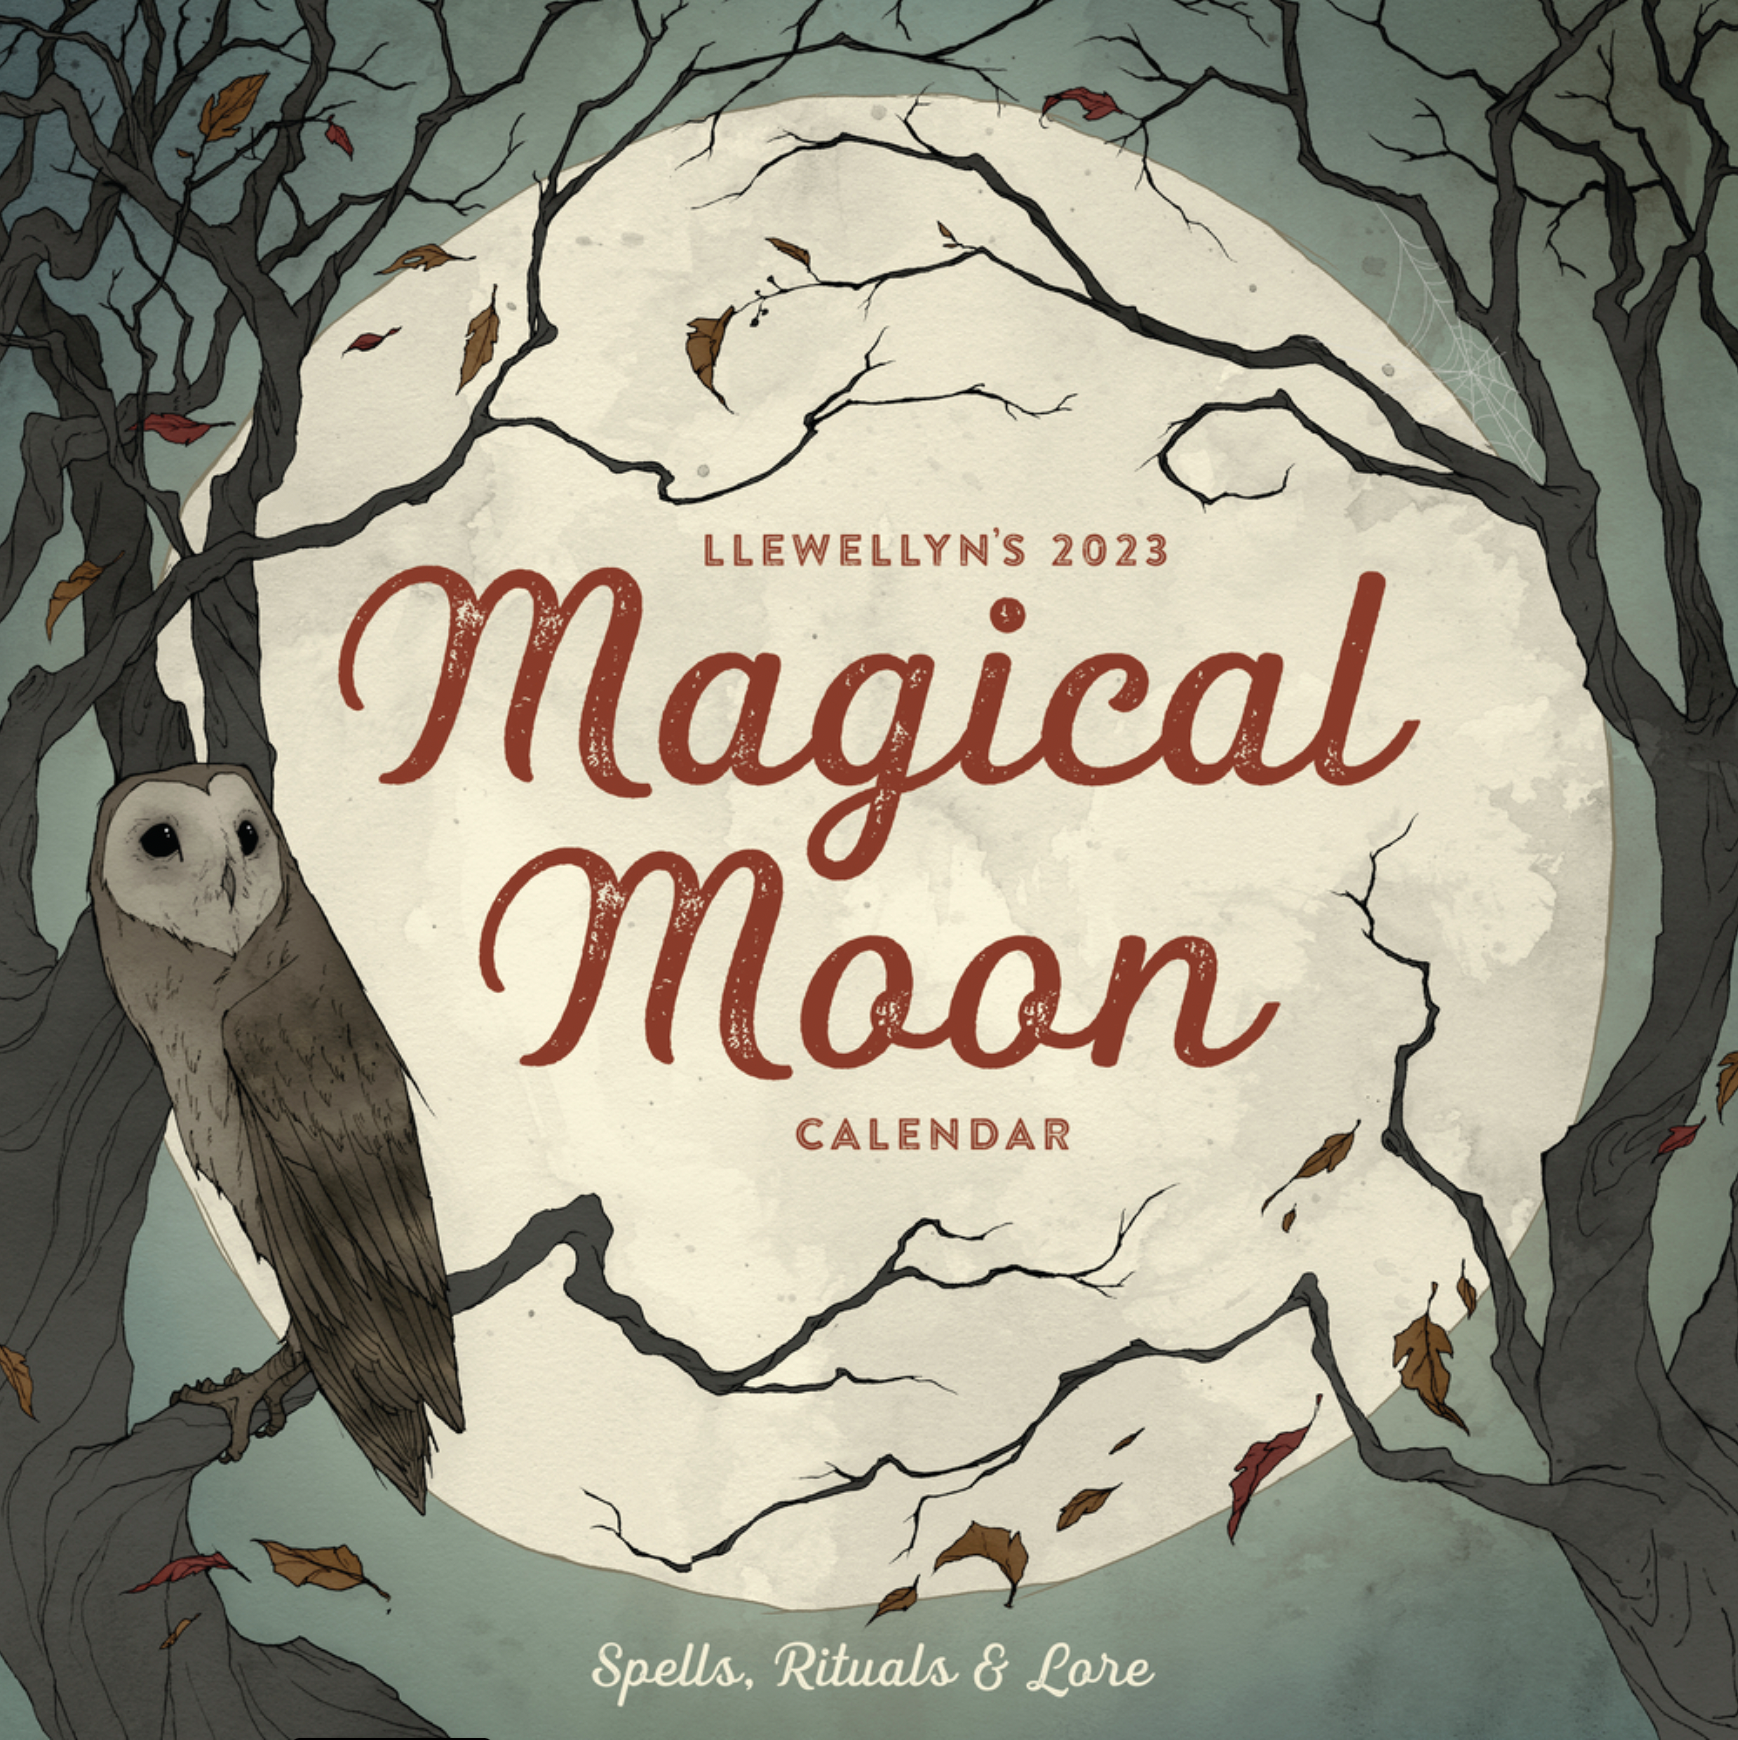 Llewellyn's 2023 Magical Moon Calendar